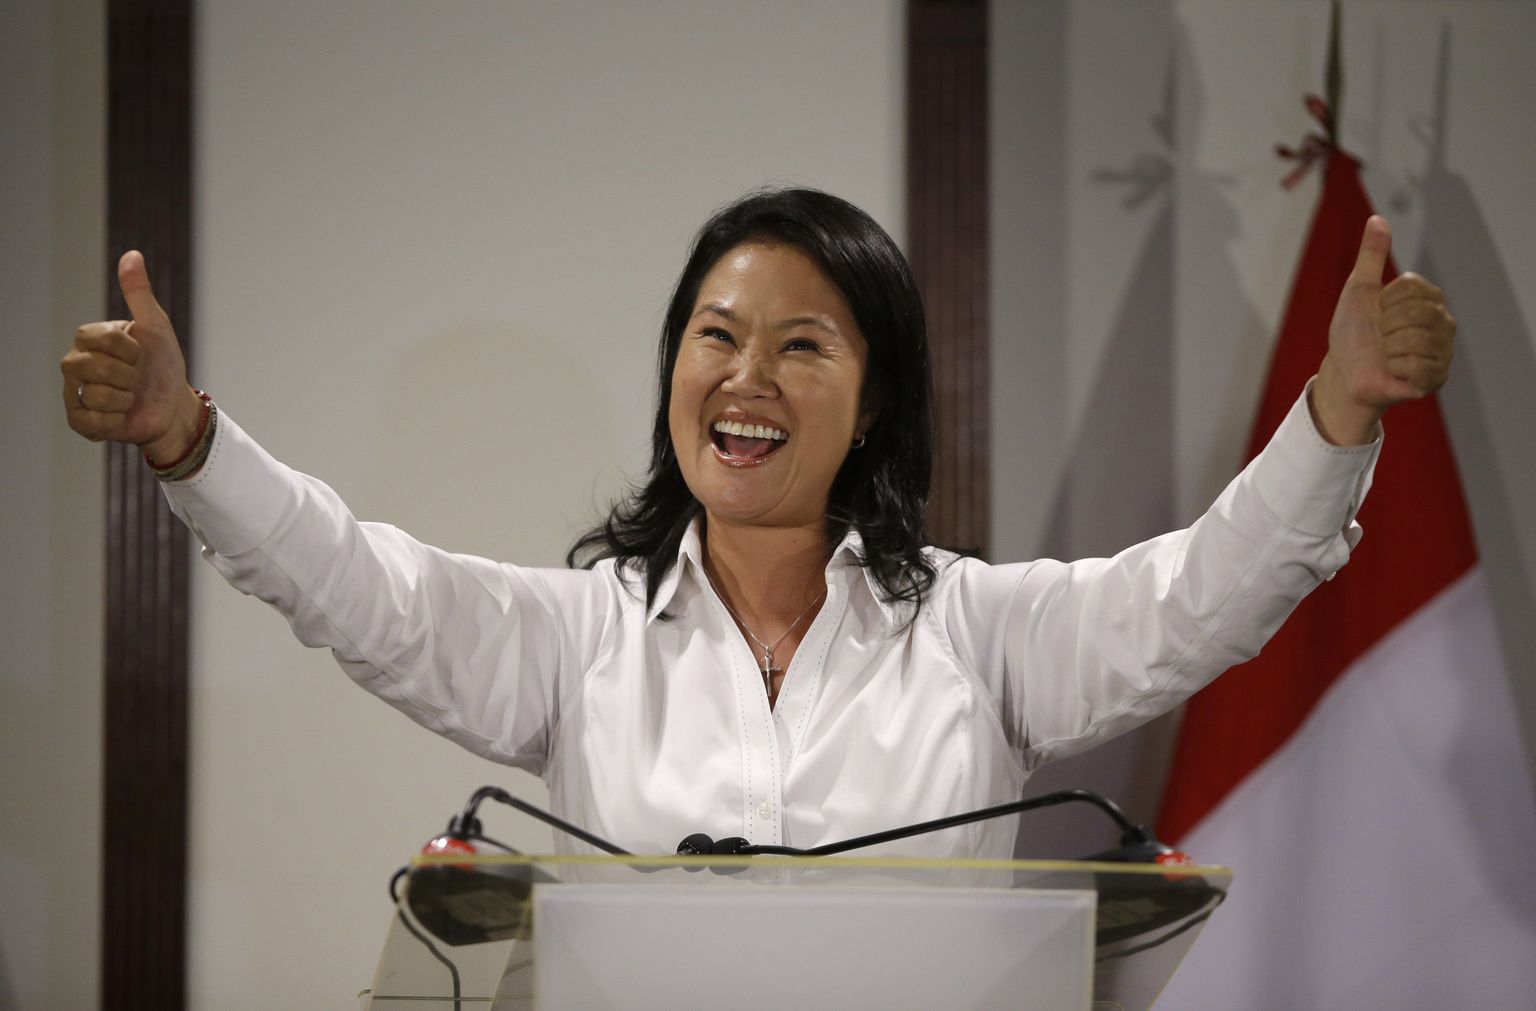 Peruu presidendikandidaat Keiko Fujimori